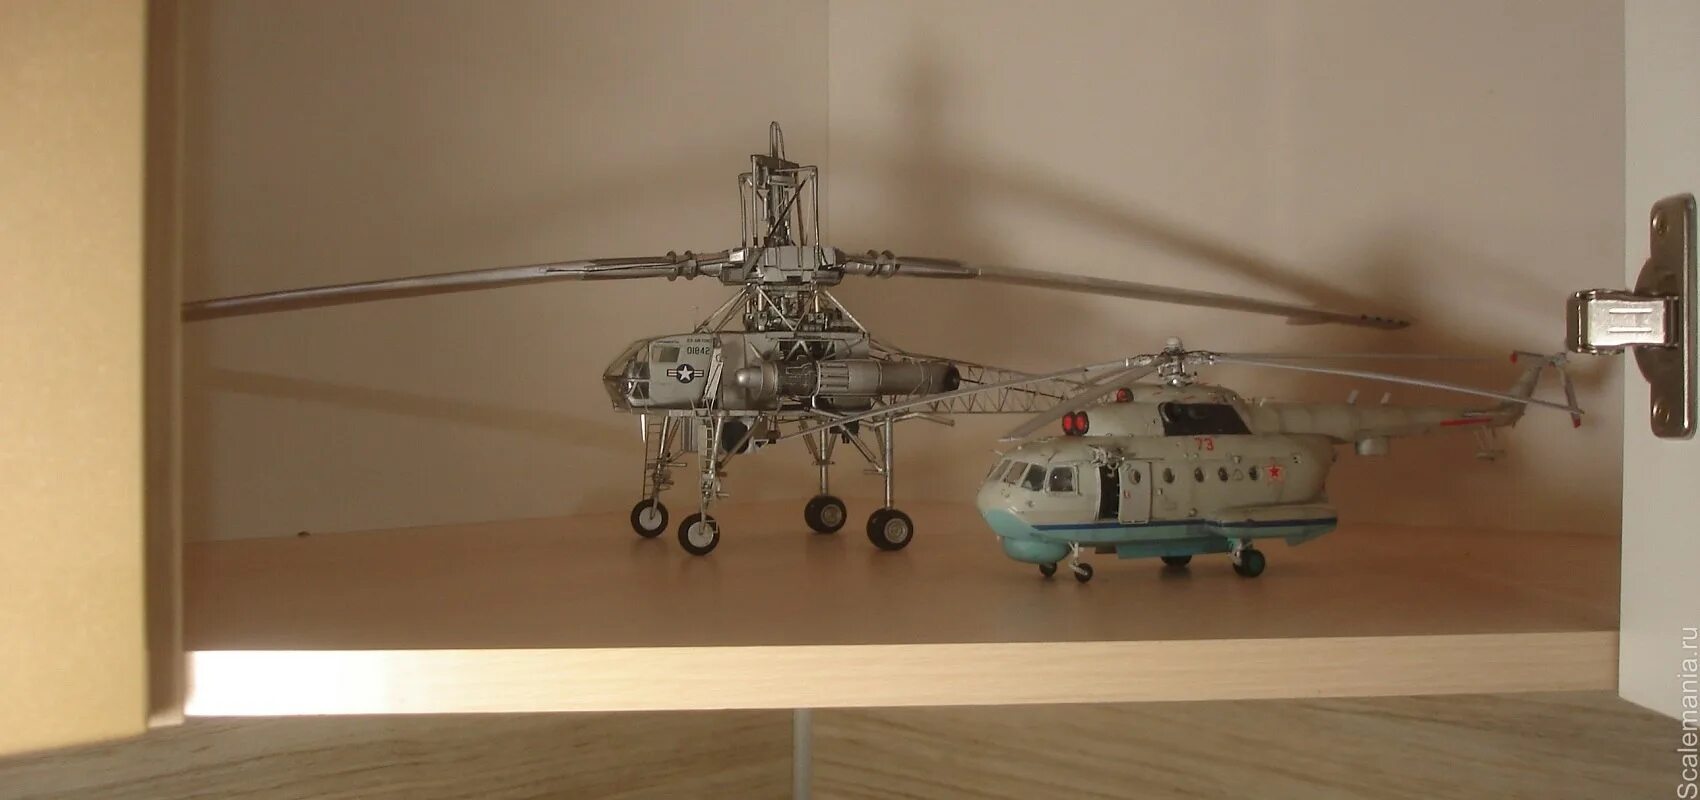 Ми2 вертолет Моделист 1\\48. Модель вертолета ми-8 1/48. 7230 Звезда 1/72 вертолет ОКБ миля Тип 8т. Ми-4 Моделист 1/72.